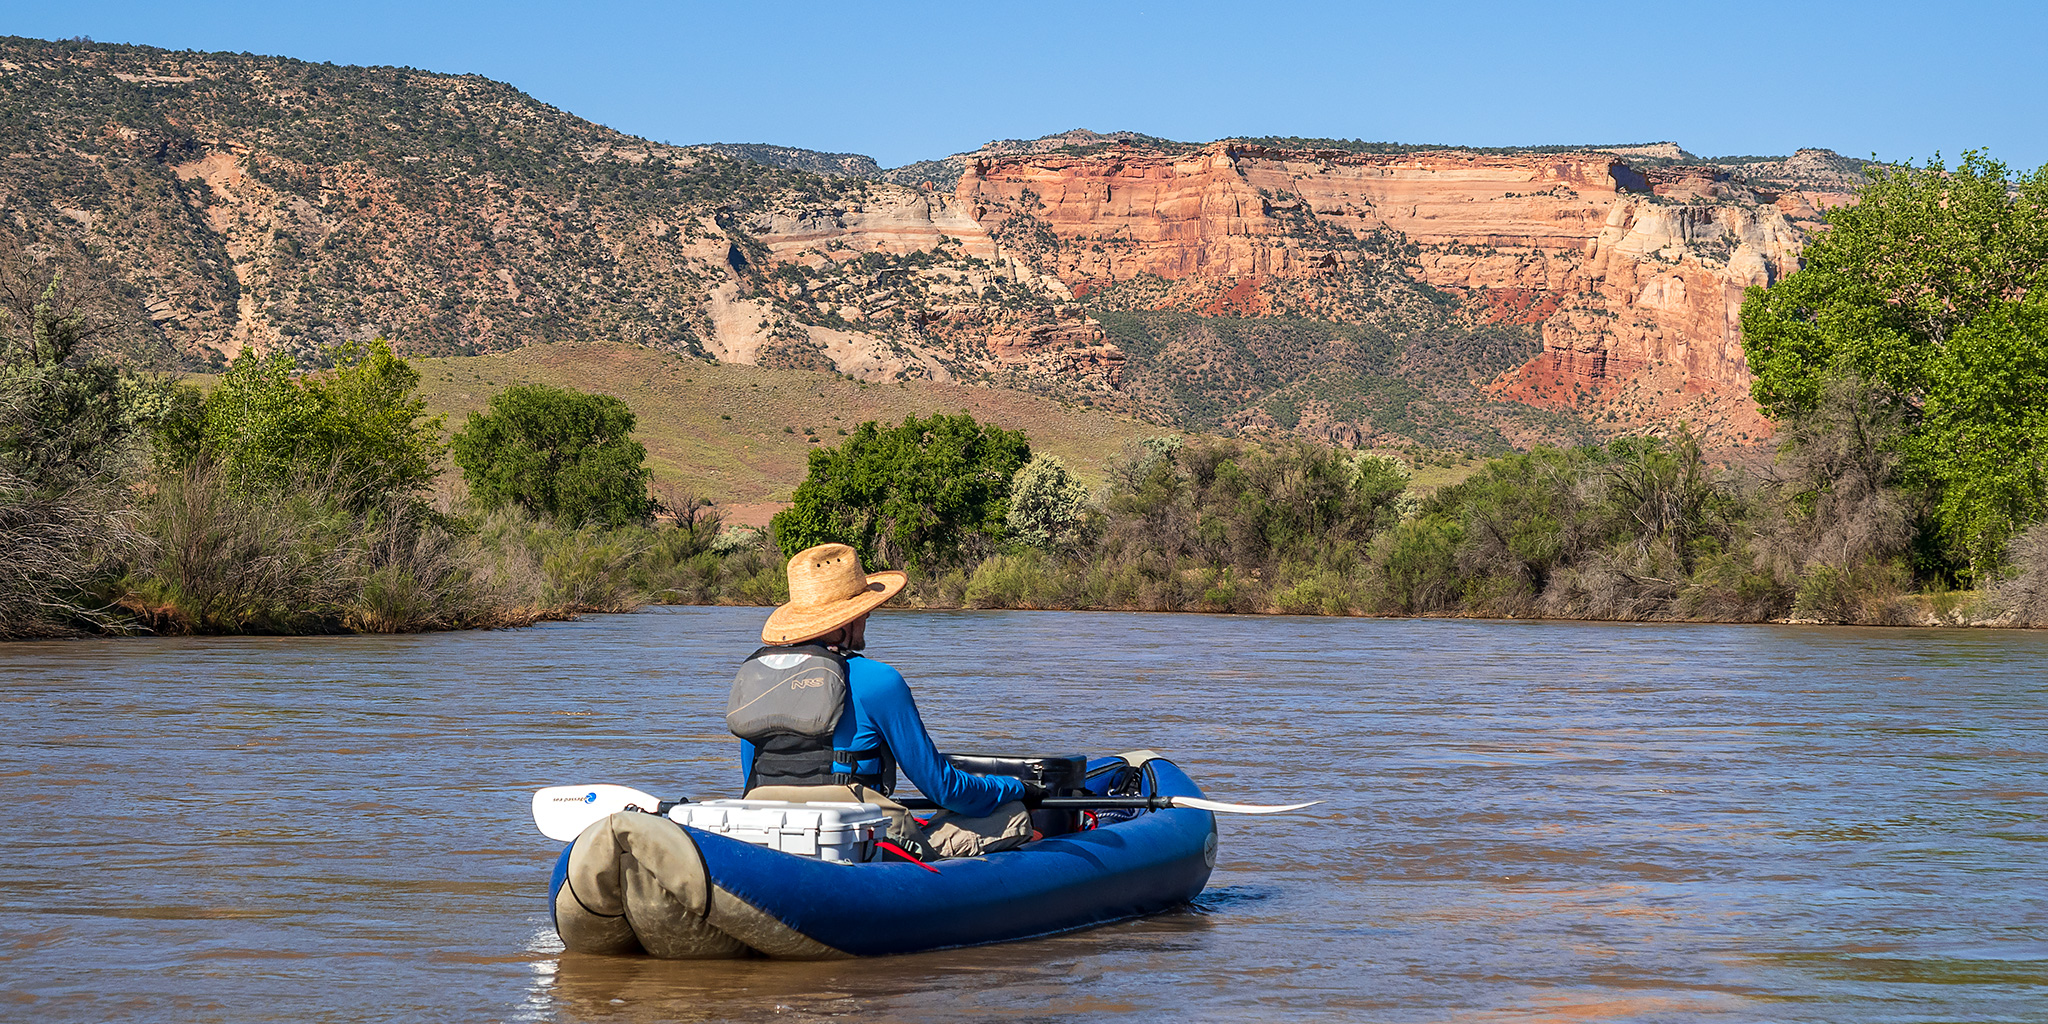 The Colorado River: Blue Heron to Loma